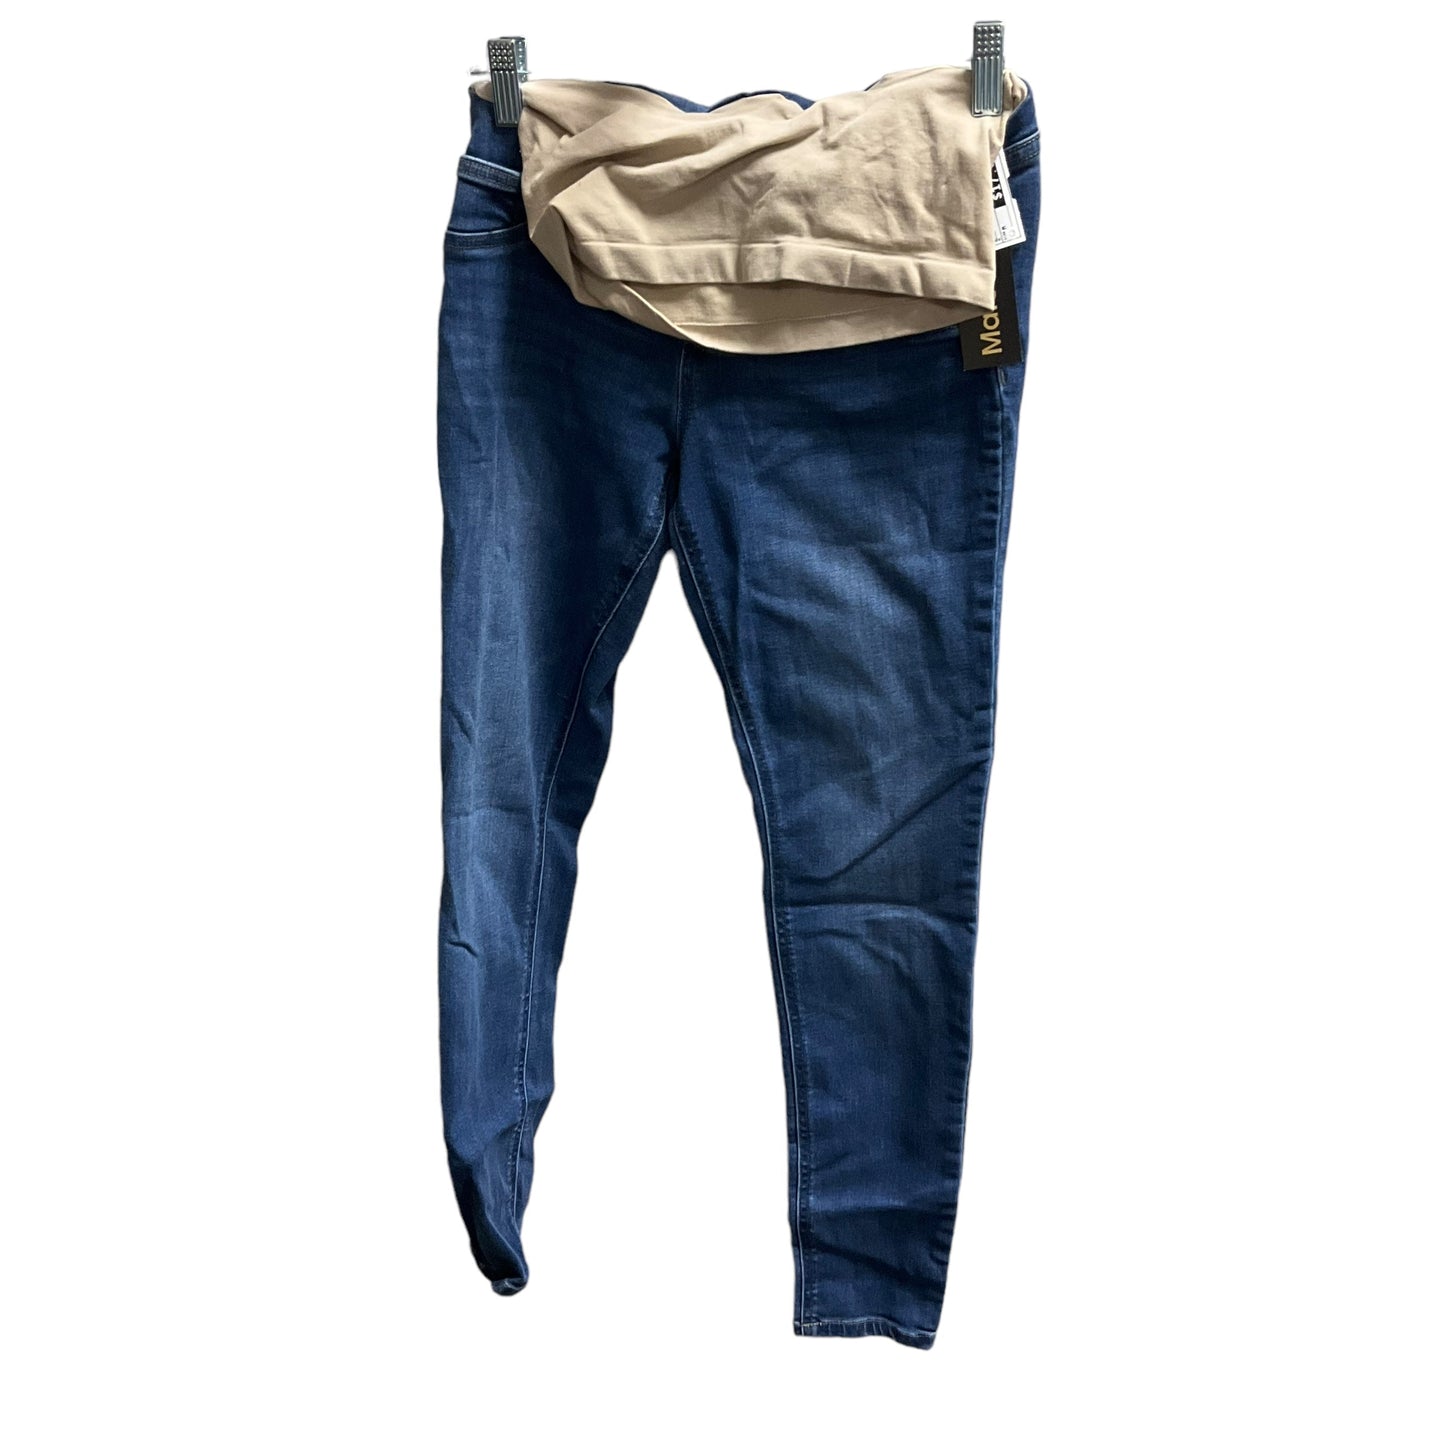 Maternity Jeans Indigo Blue, Size M